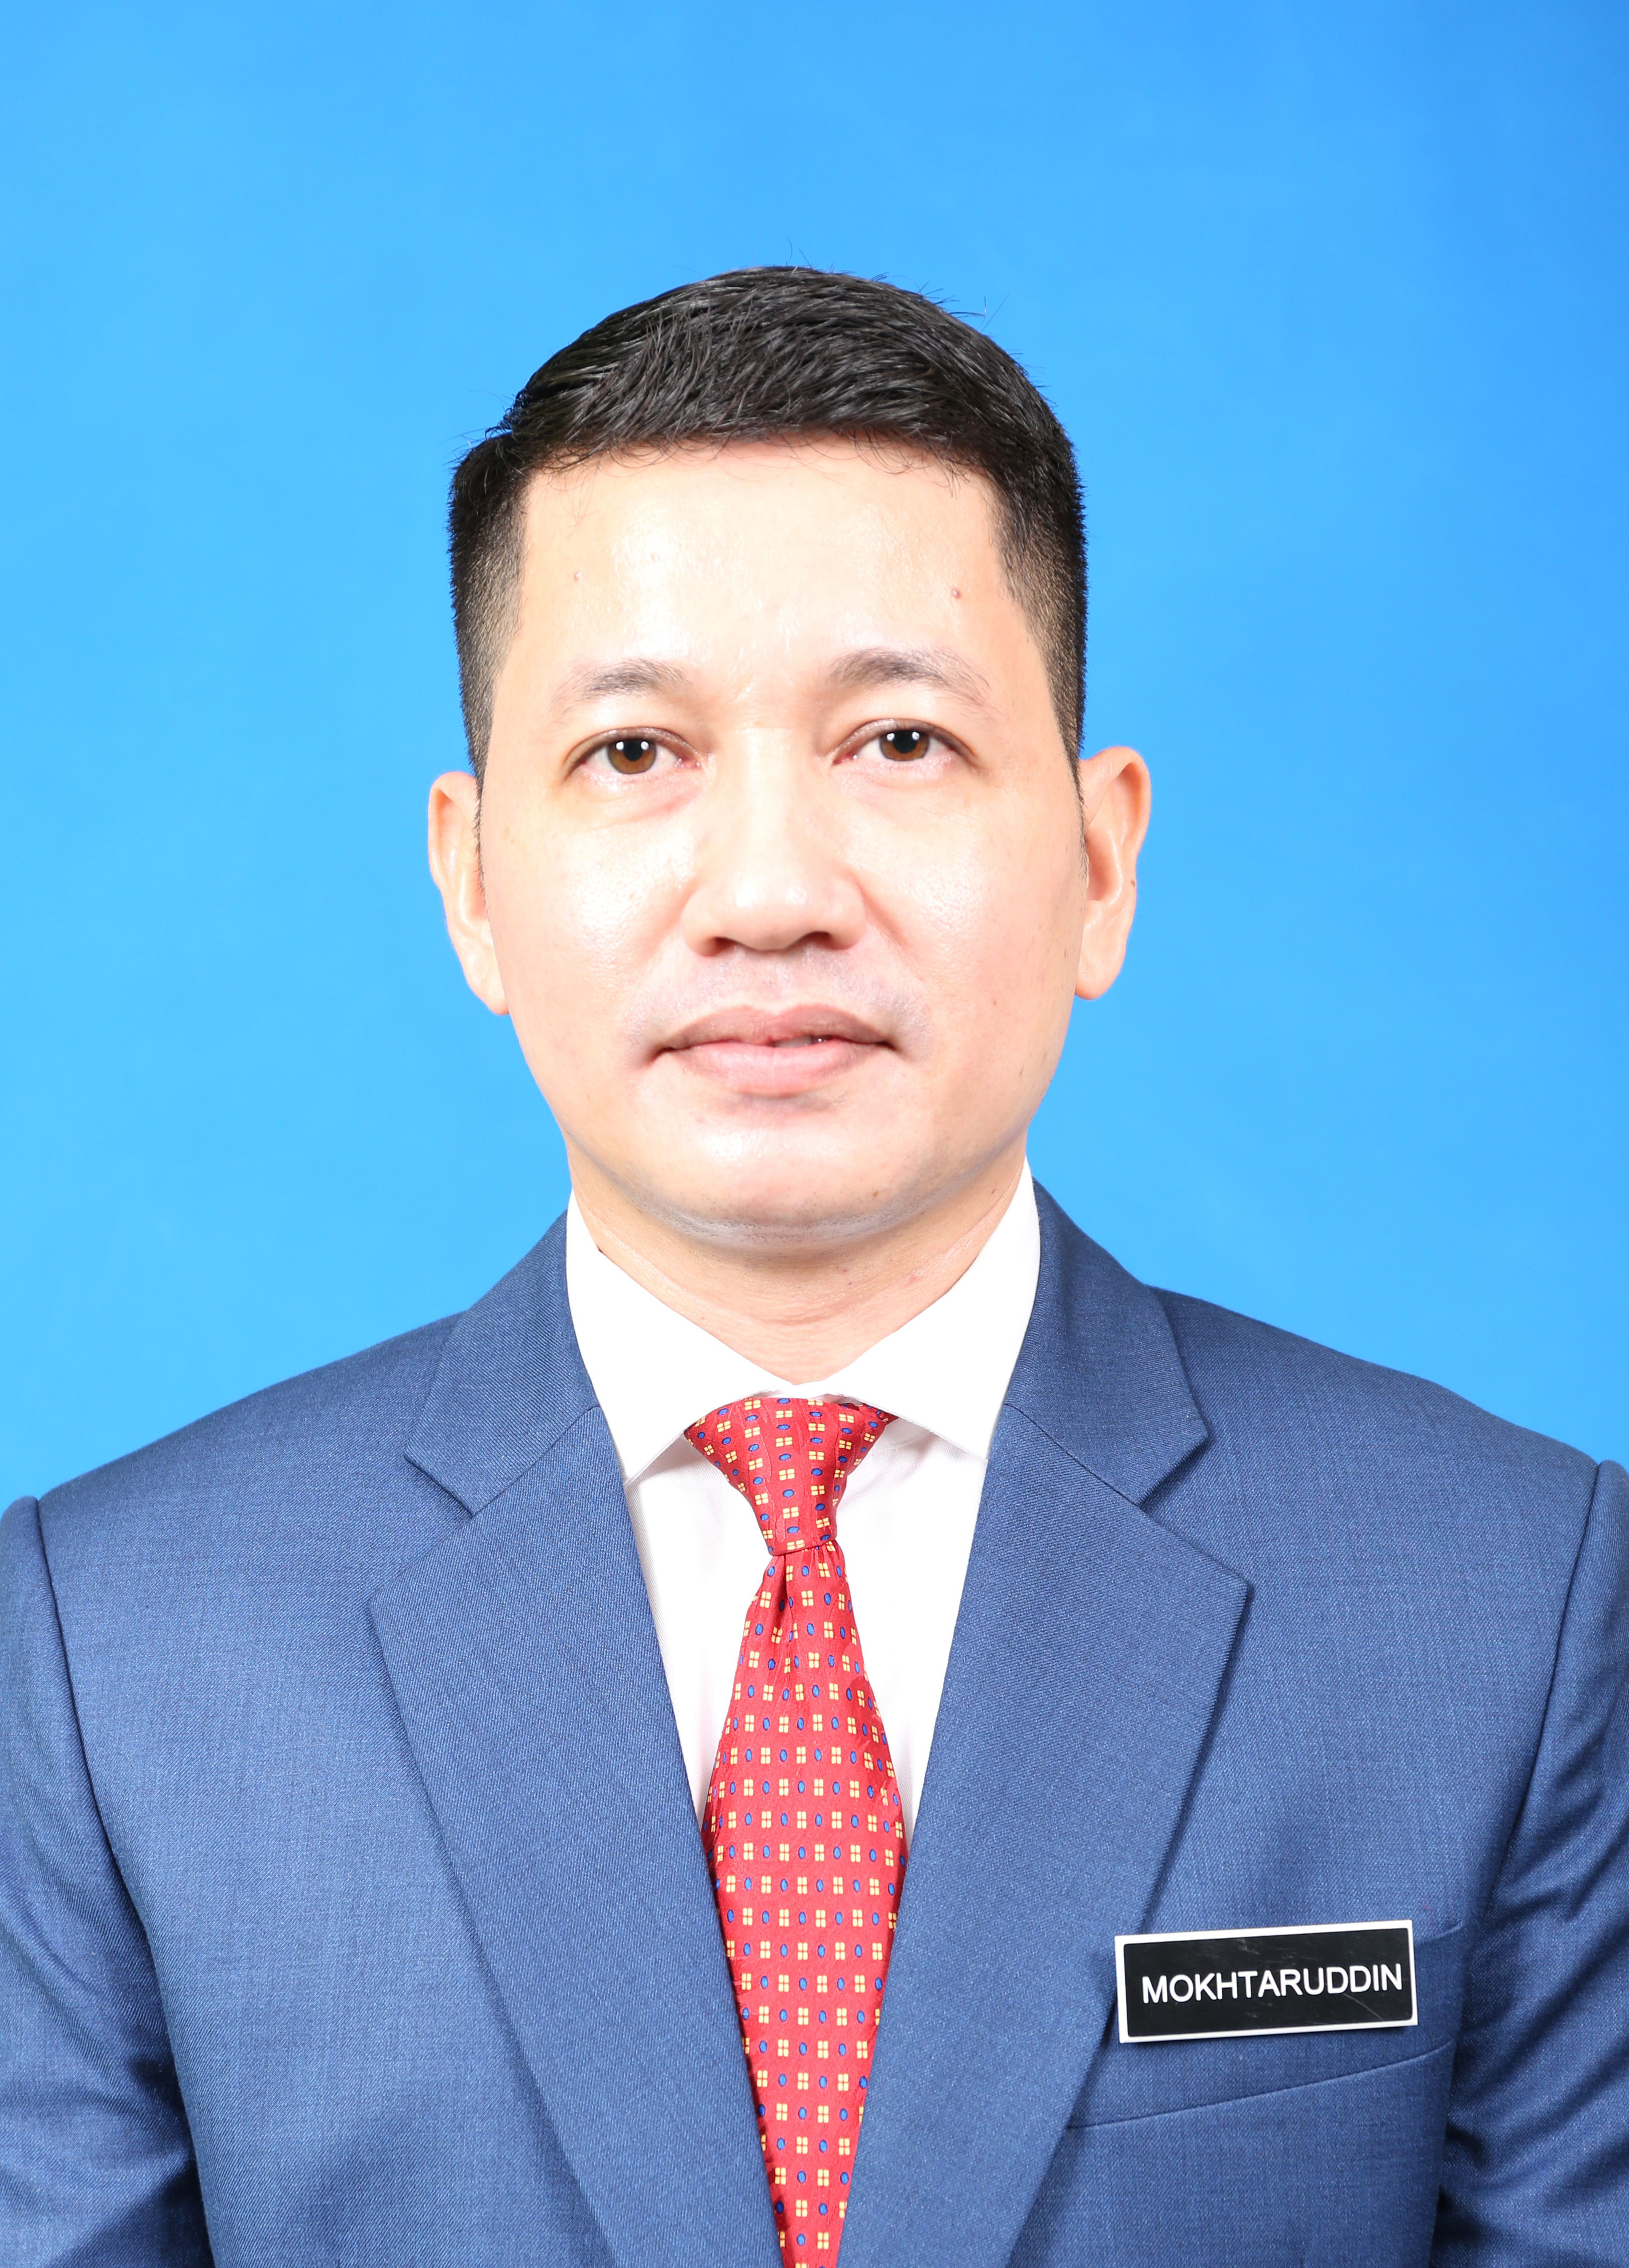 Dr. Mokhtaruddin Bin Buang